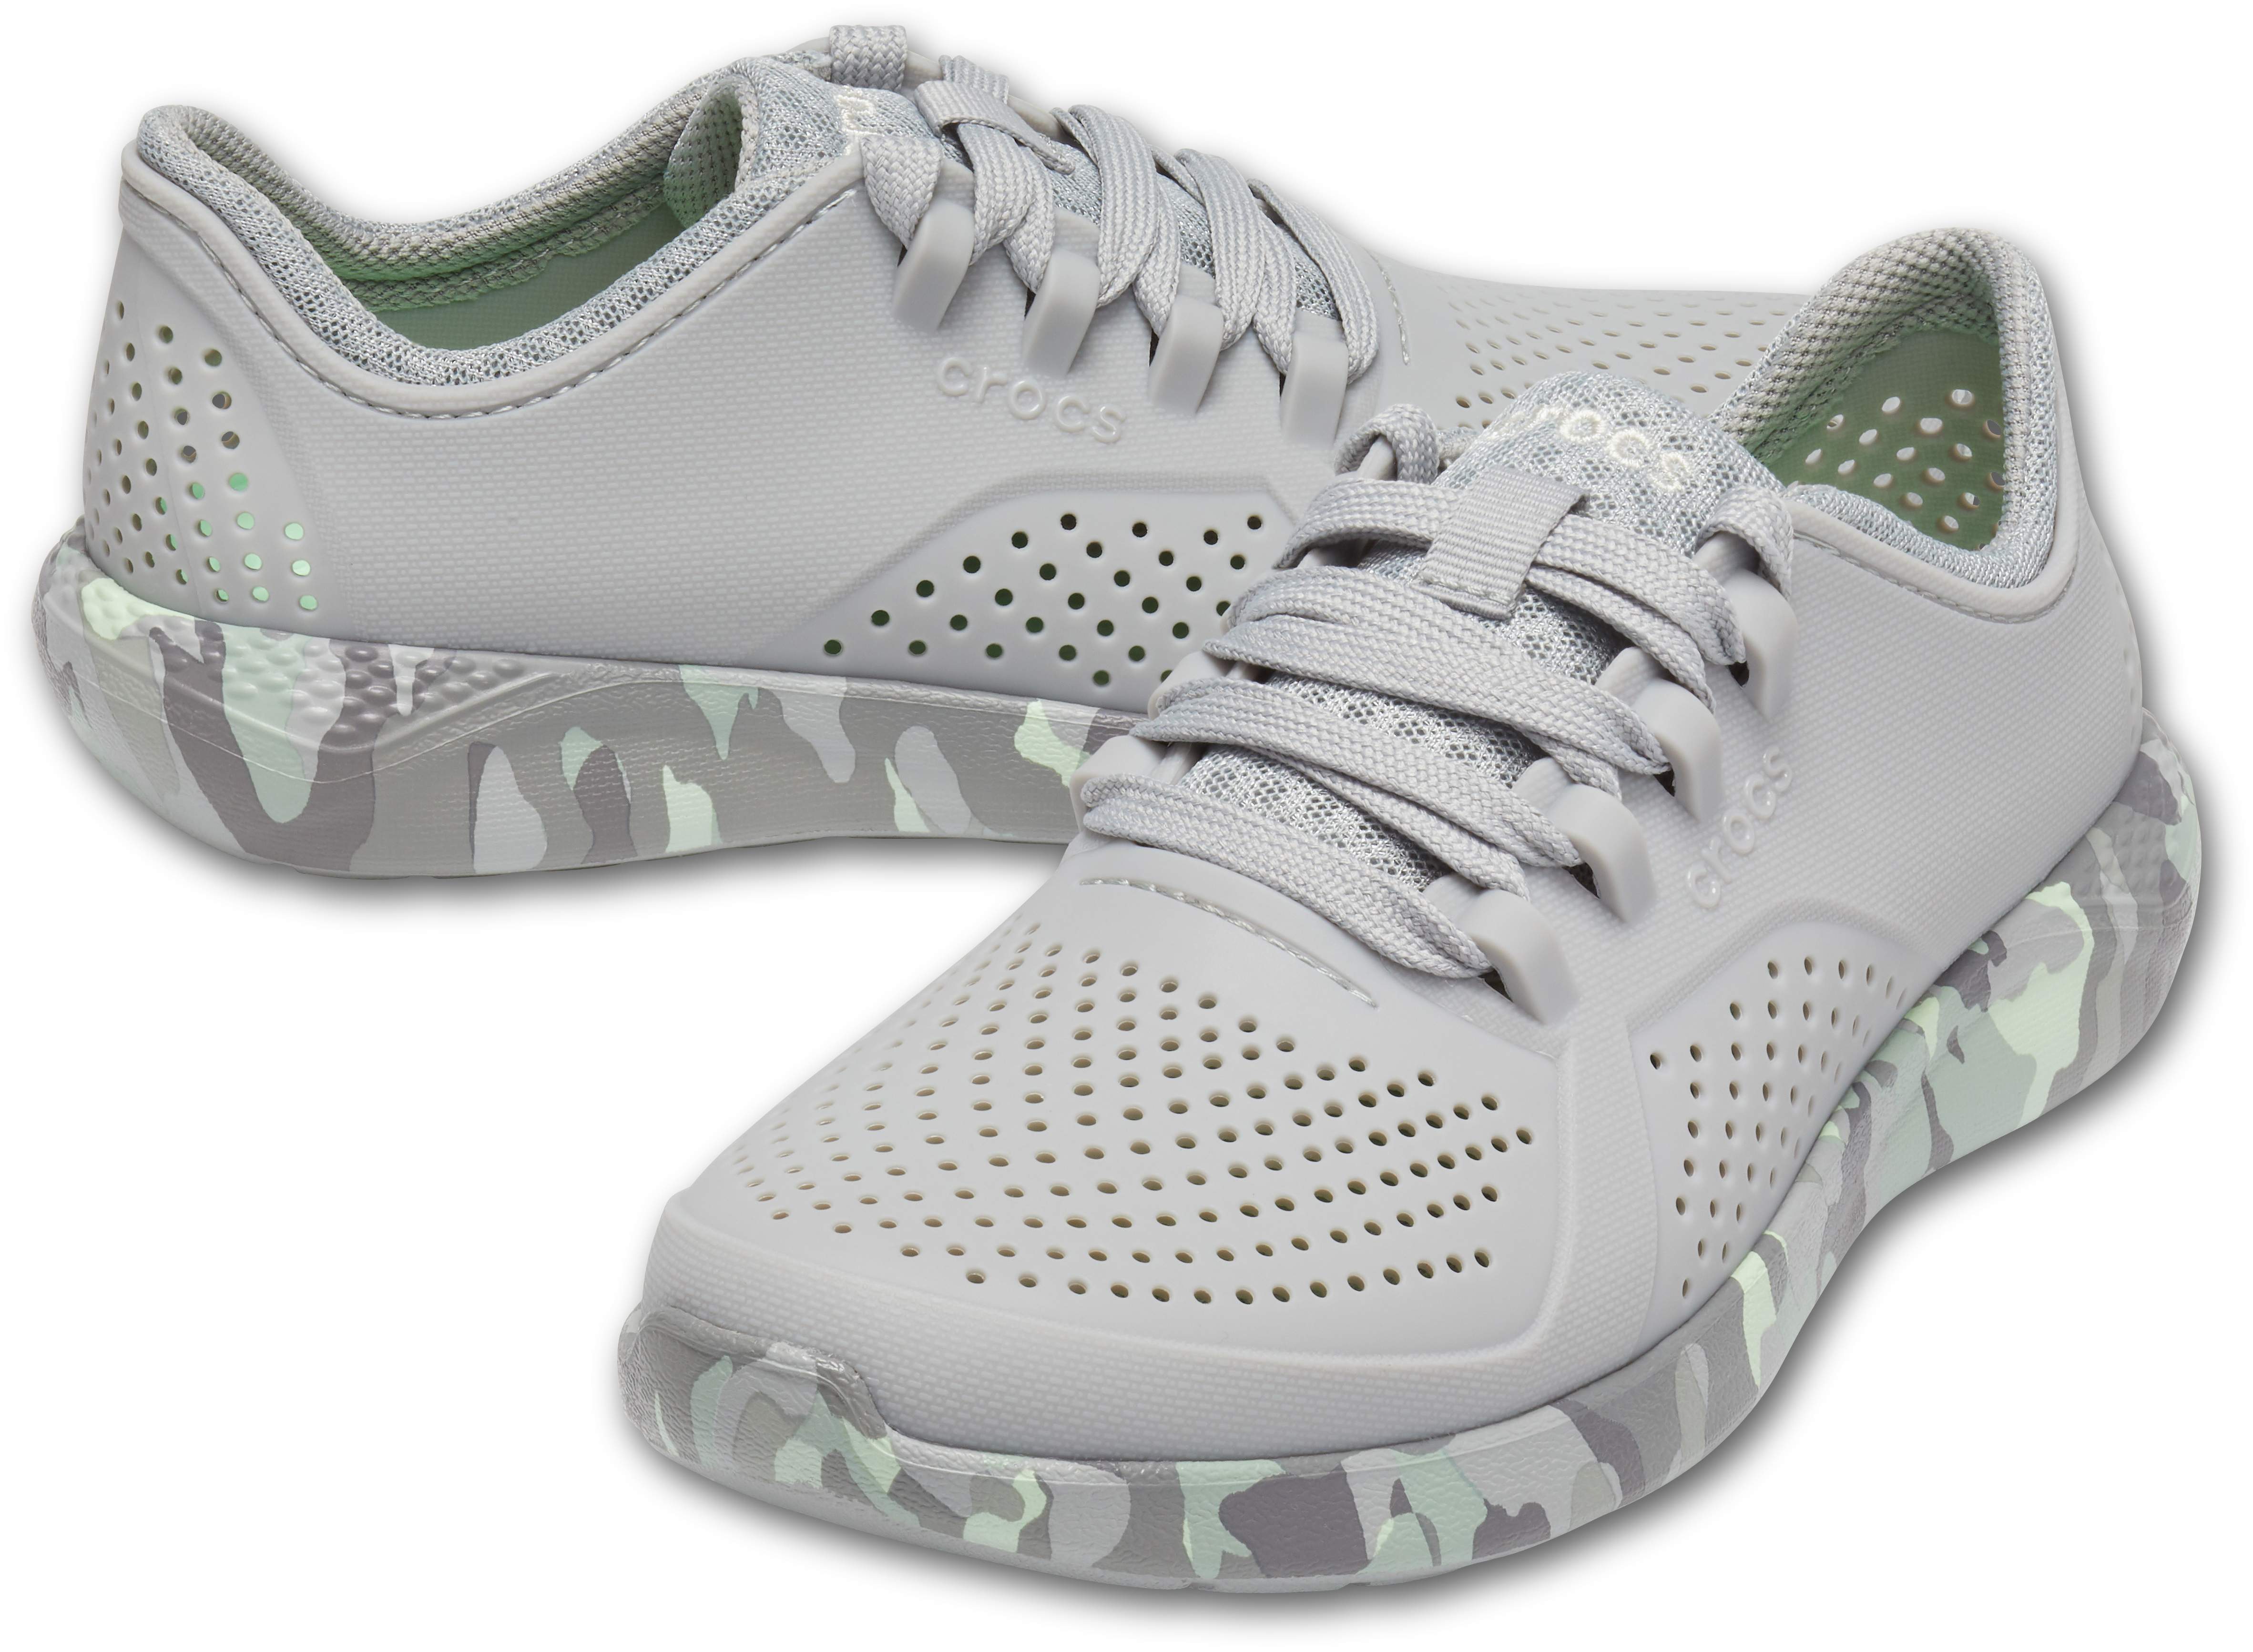 crocs literide tennis shoes